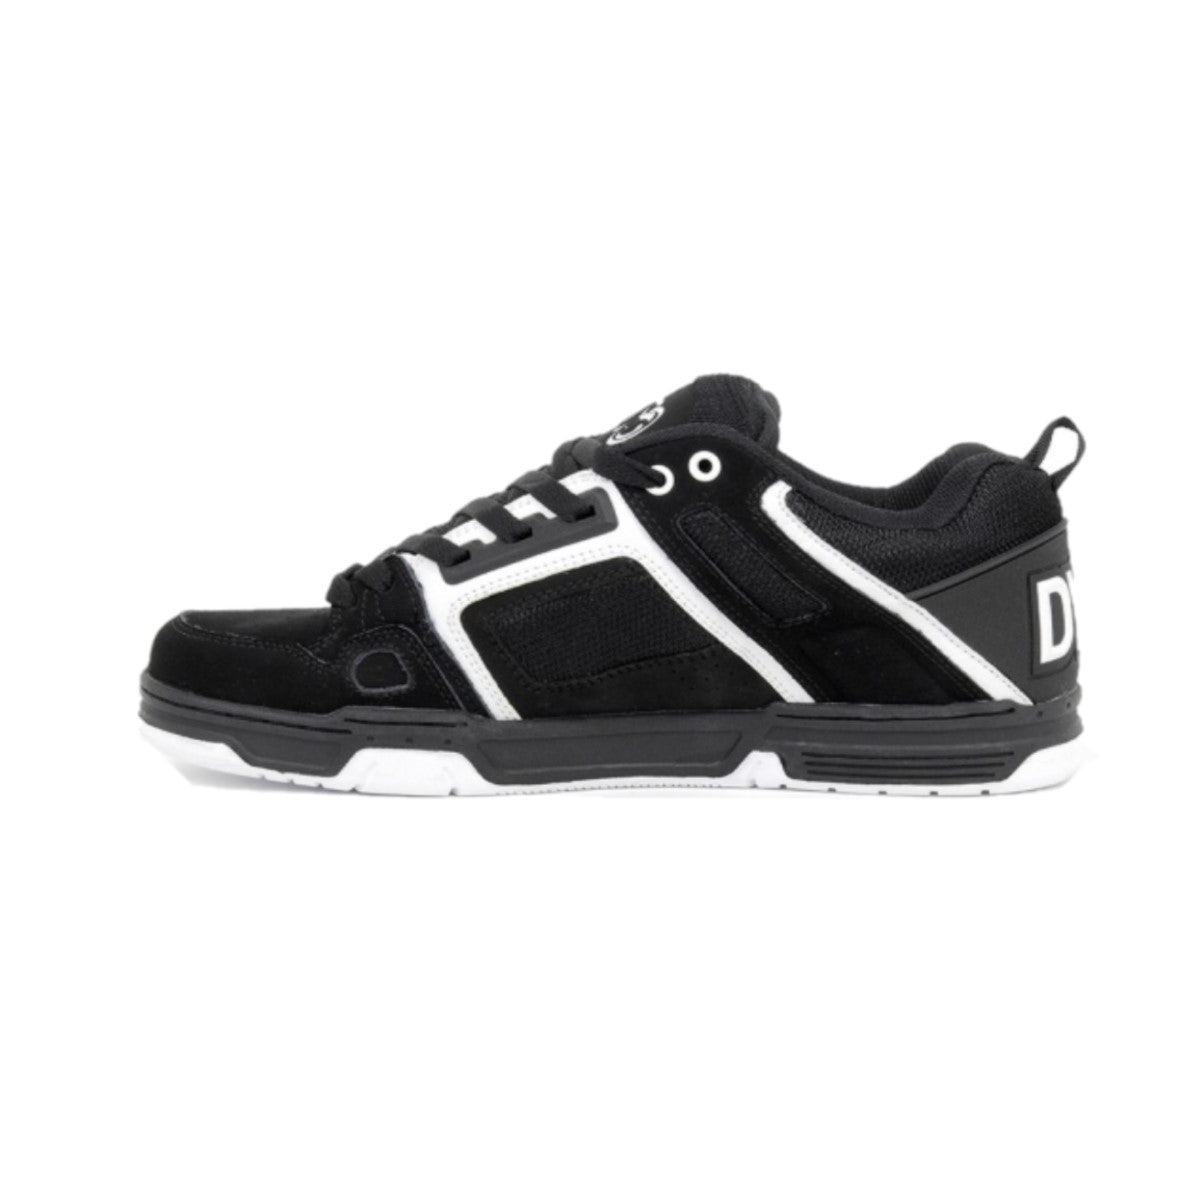 DVS F0000029972 COMANCHE MN'S (Medium) Black/White Leather & Nubuck Skate Shoes